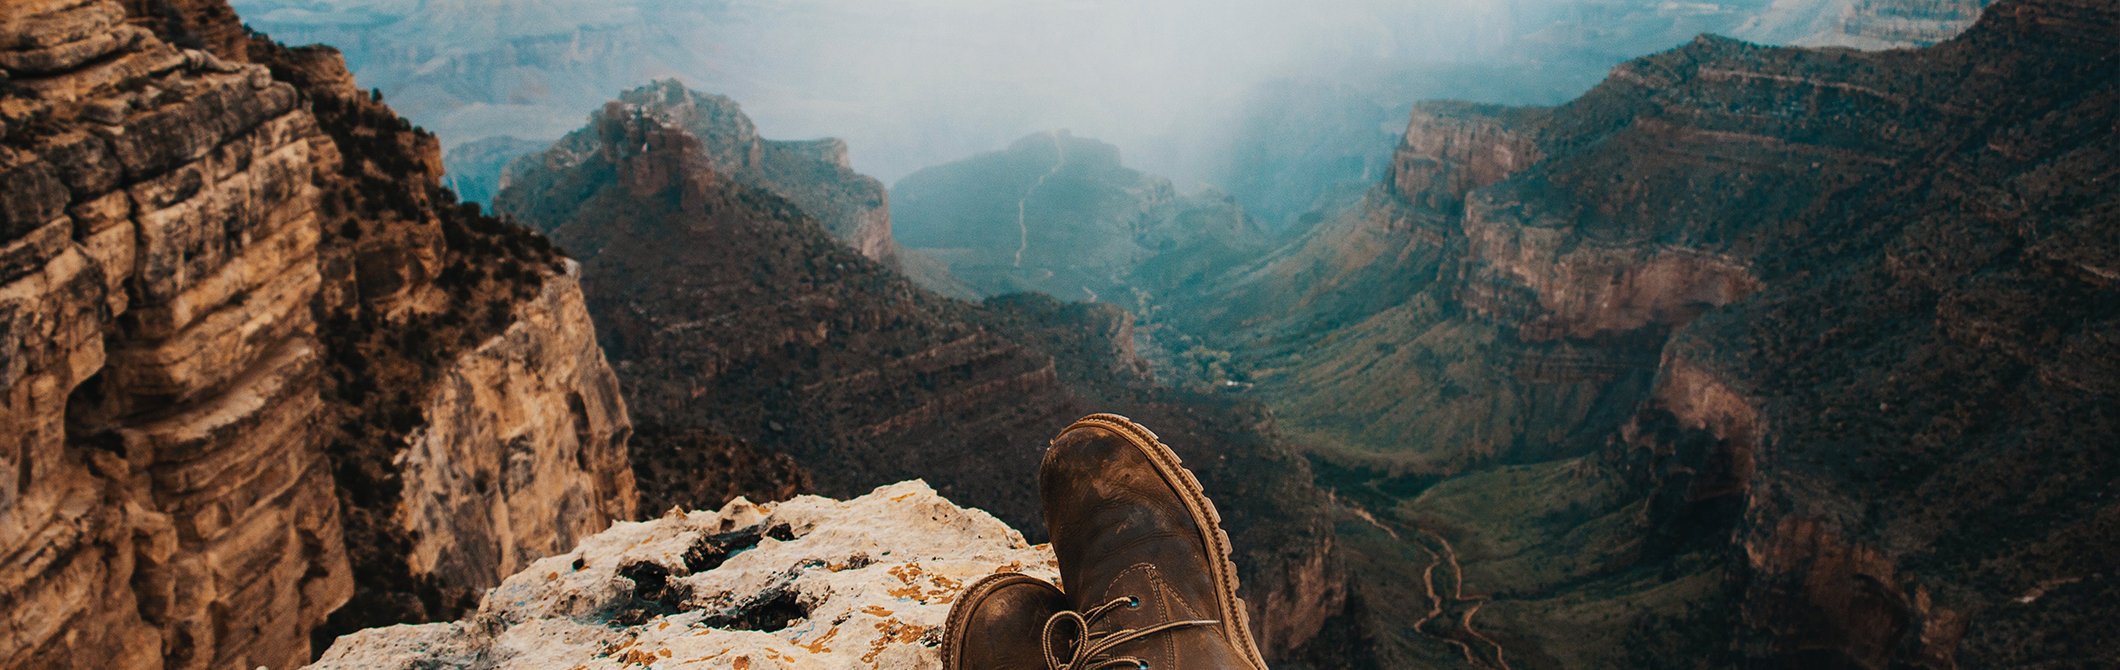 Shoes Grand Canyon 2120x670